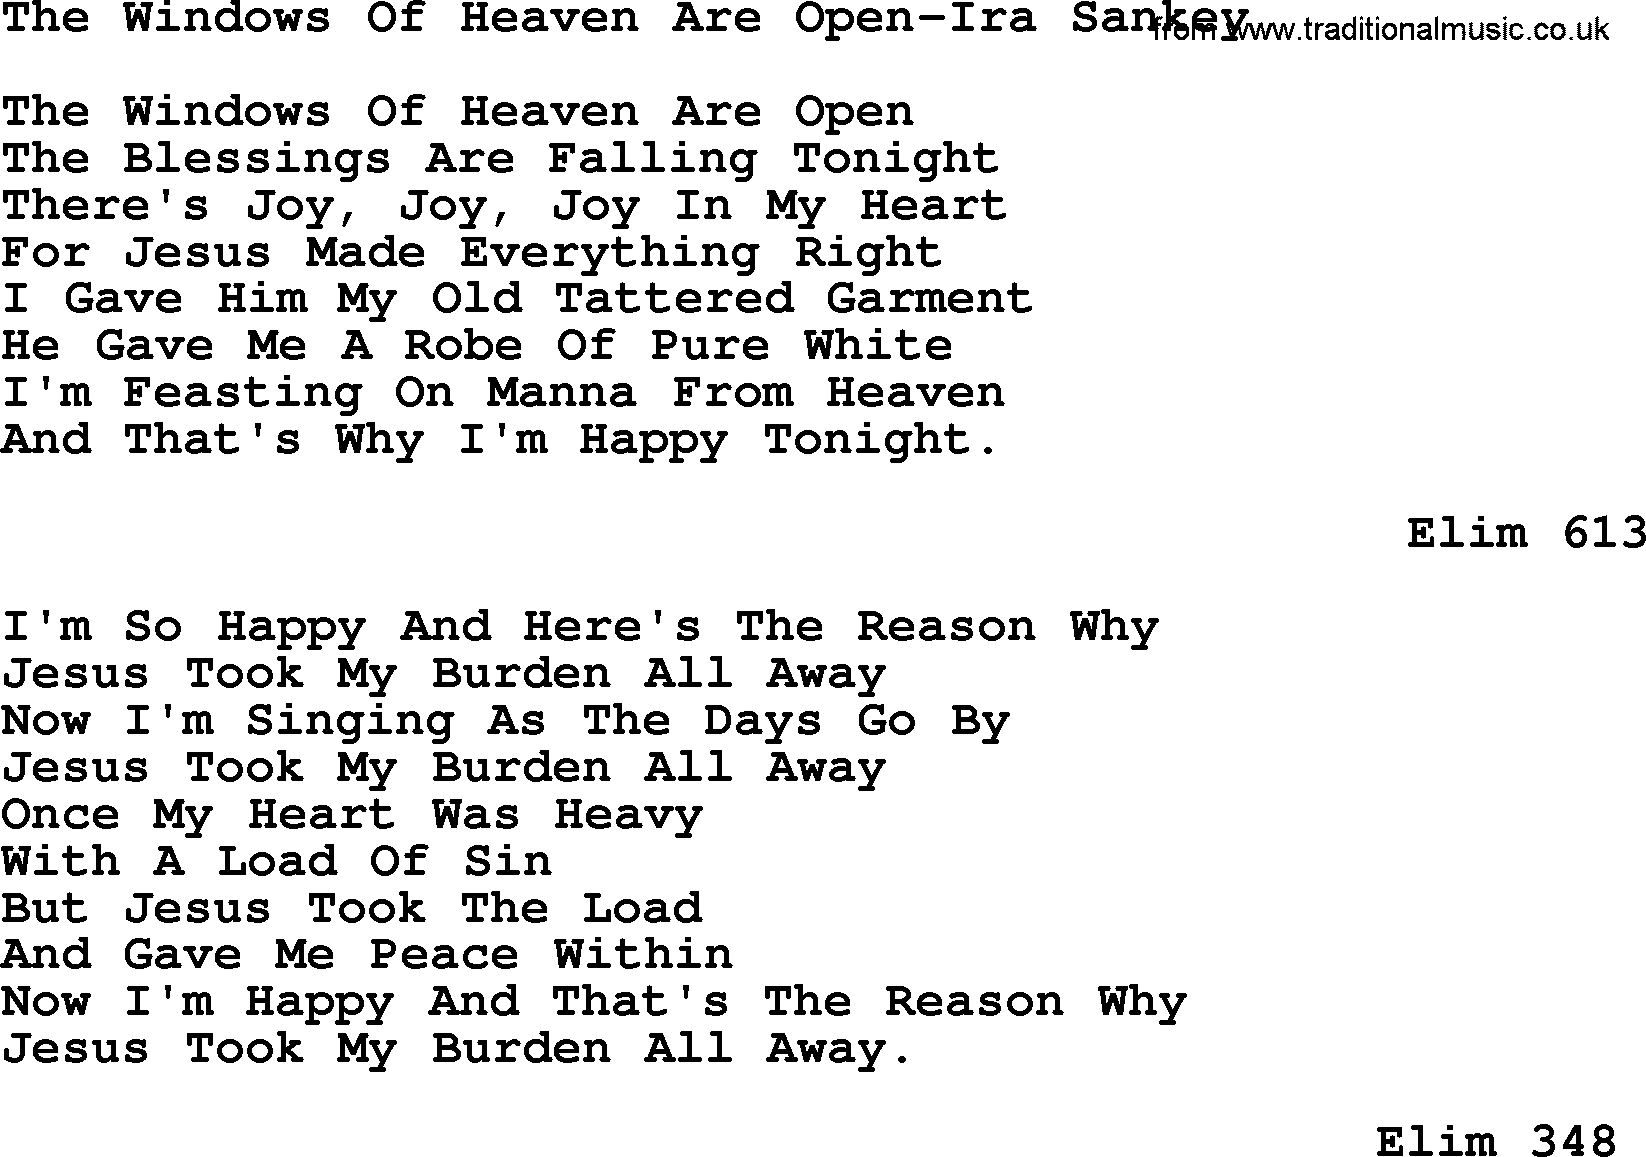 Ira Sankey hymn: The Windows Of Heaven Are Open-Ira Sankey, lyrics